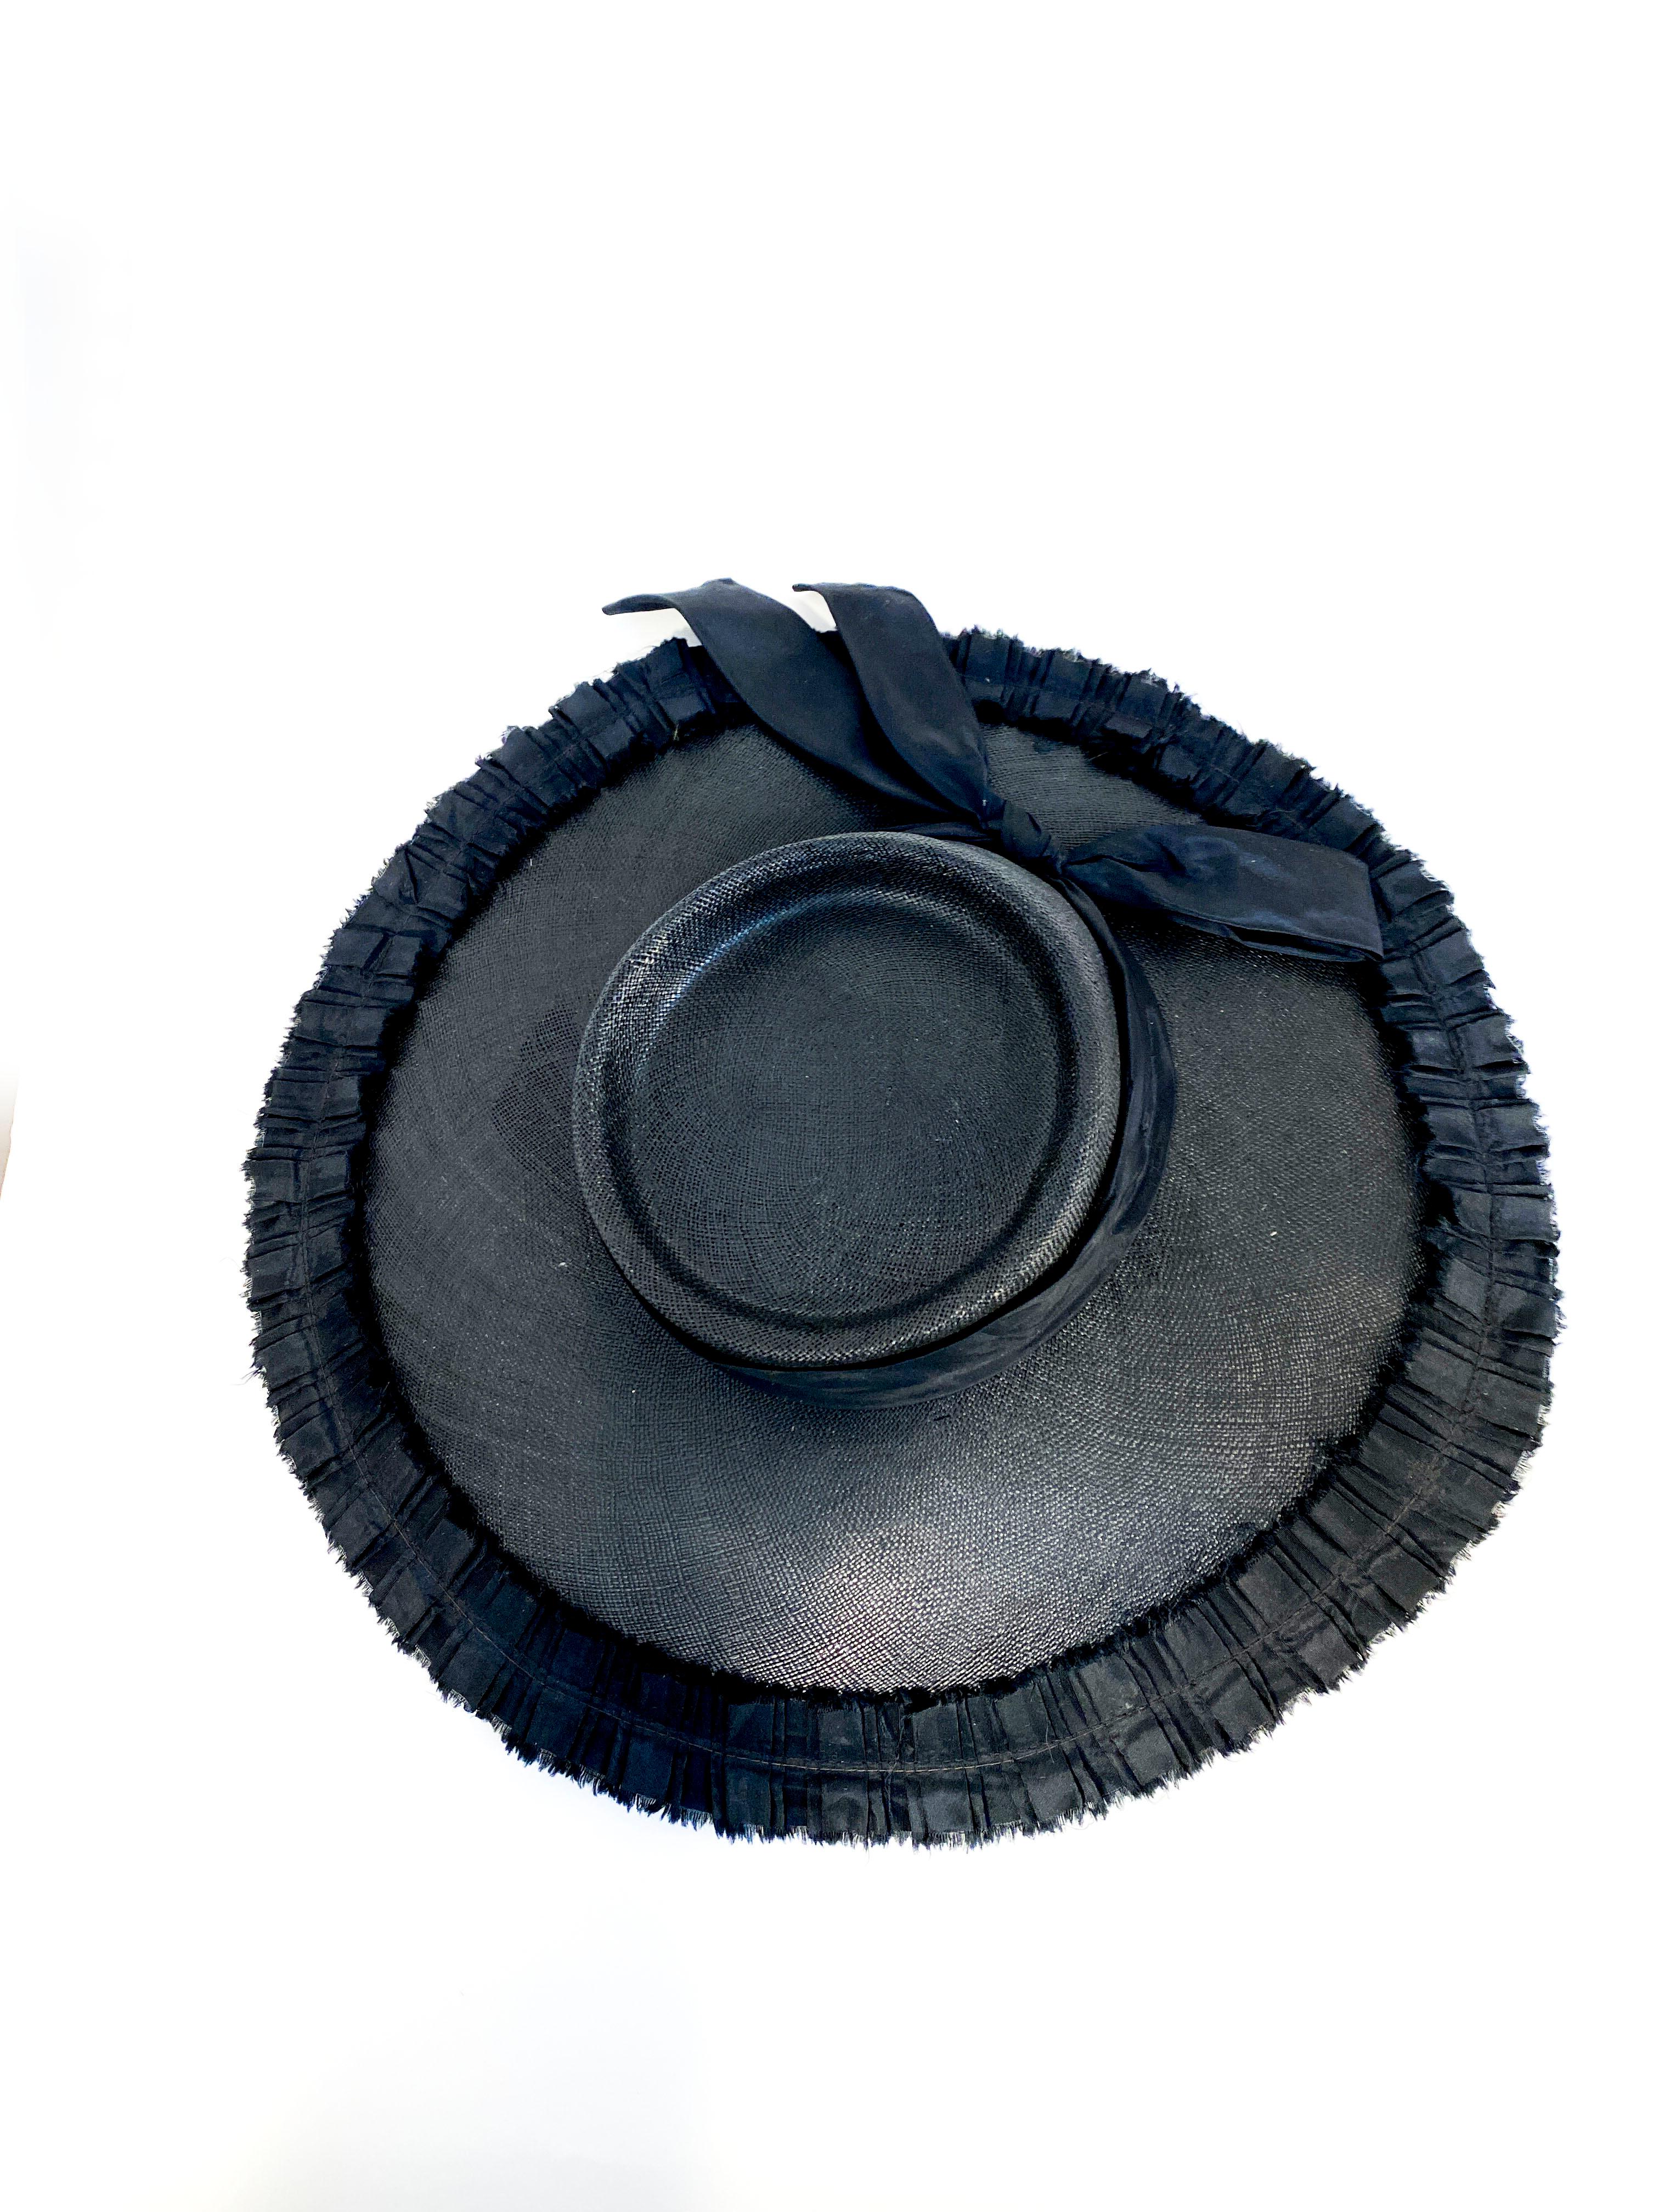 Women's or Men's 1940s Black Wide-Brimmed Woven Hat